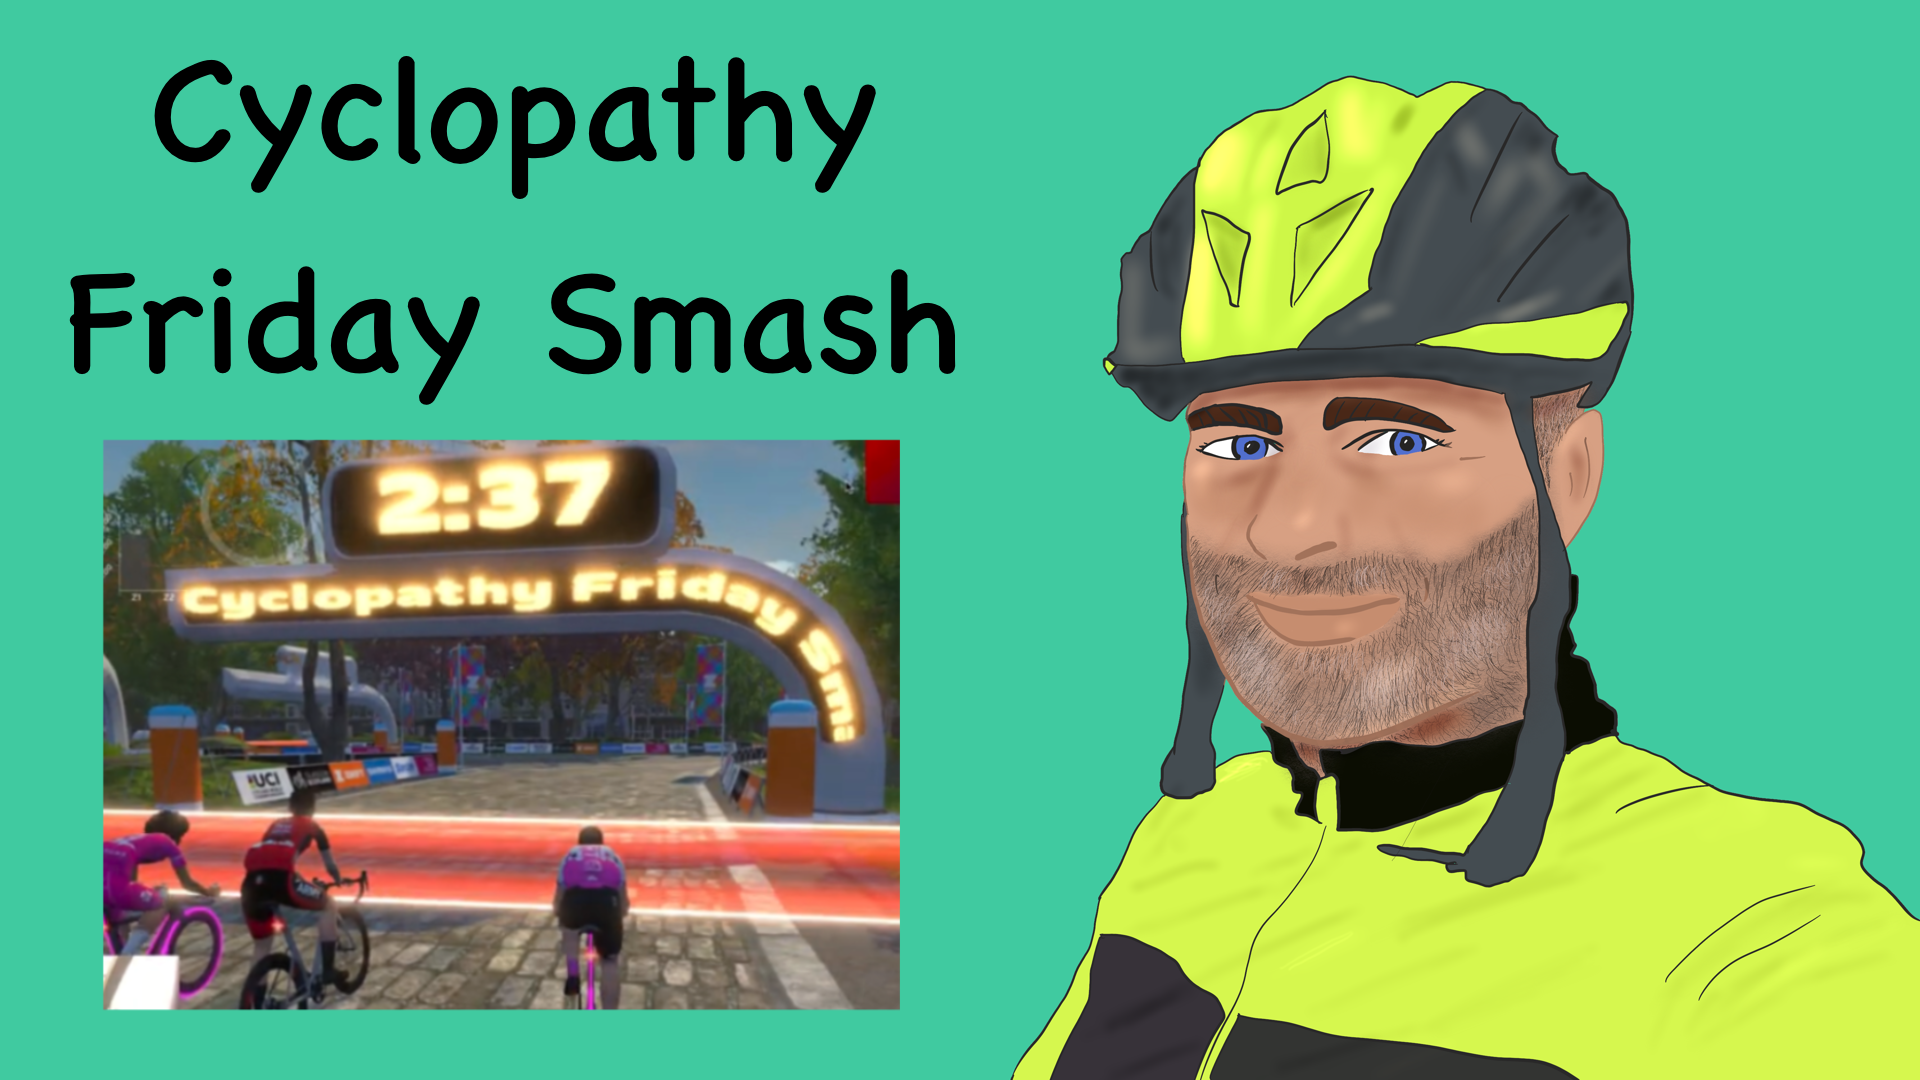 Introducing Cyclopathy Friday Smash